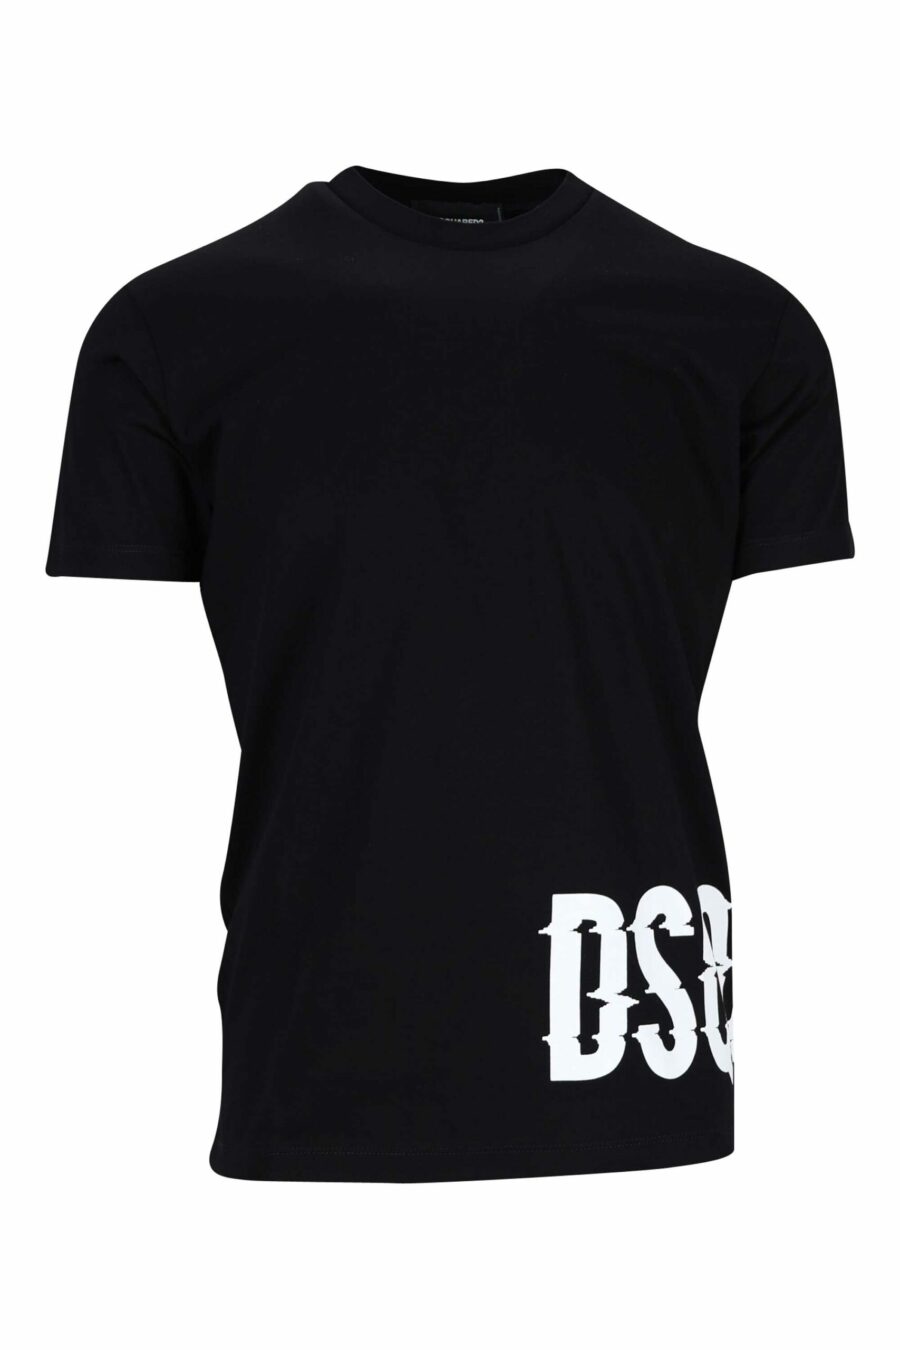 Camiseta negra con maxilogo negro distorsionado bajo - 8054148332808 scaled